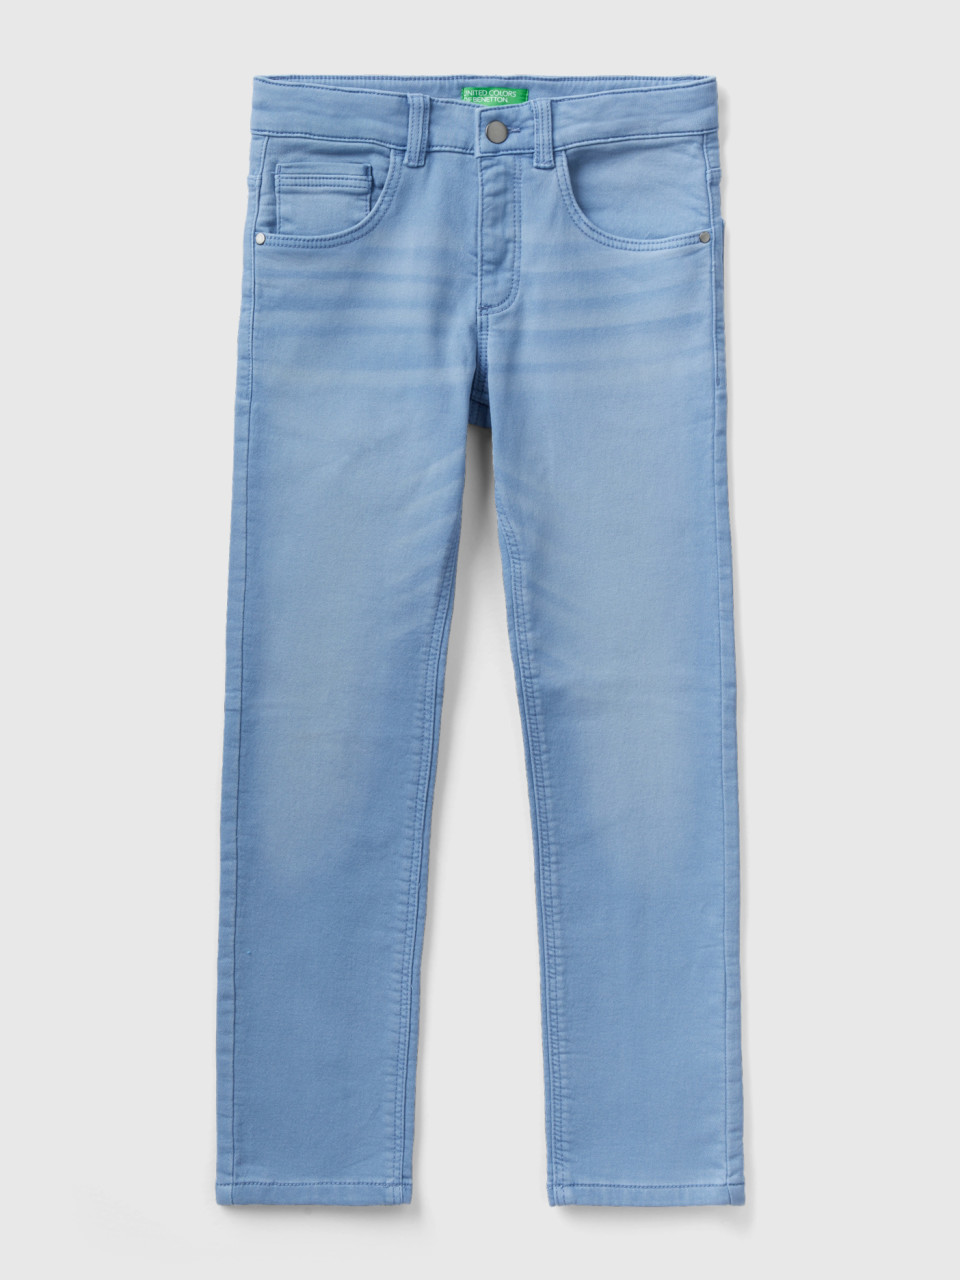 Benetton, Five Pocket Jeans, Light Blue, Kids